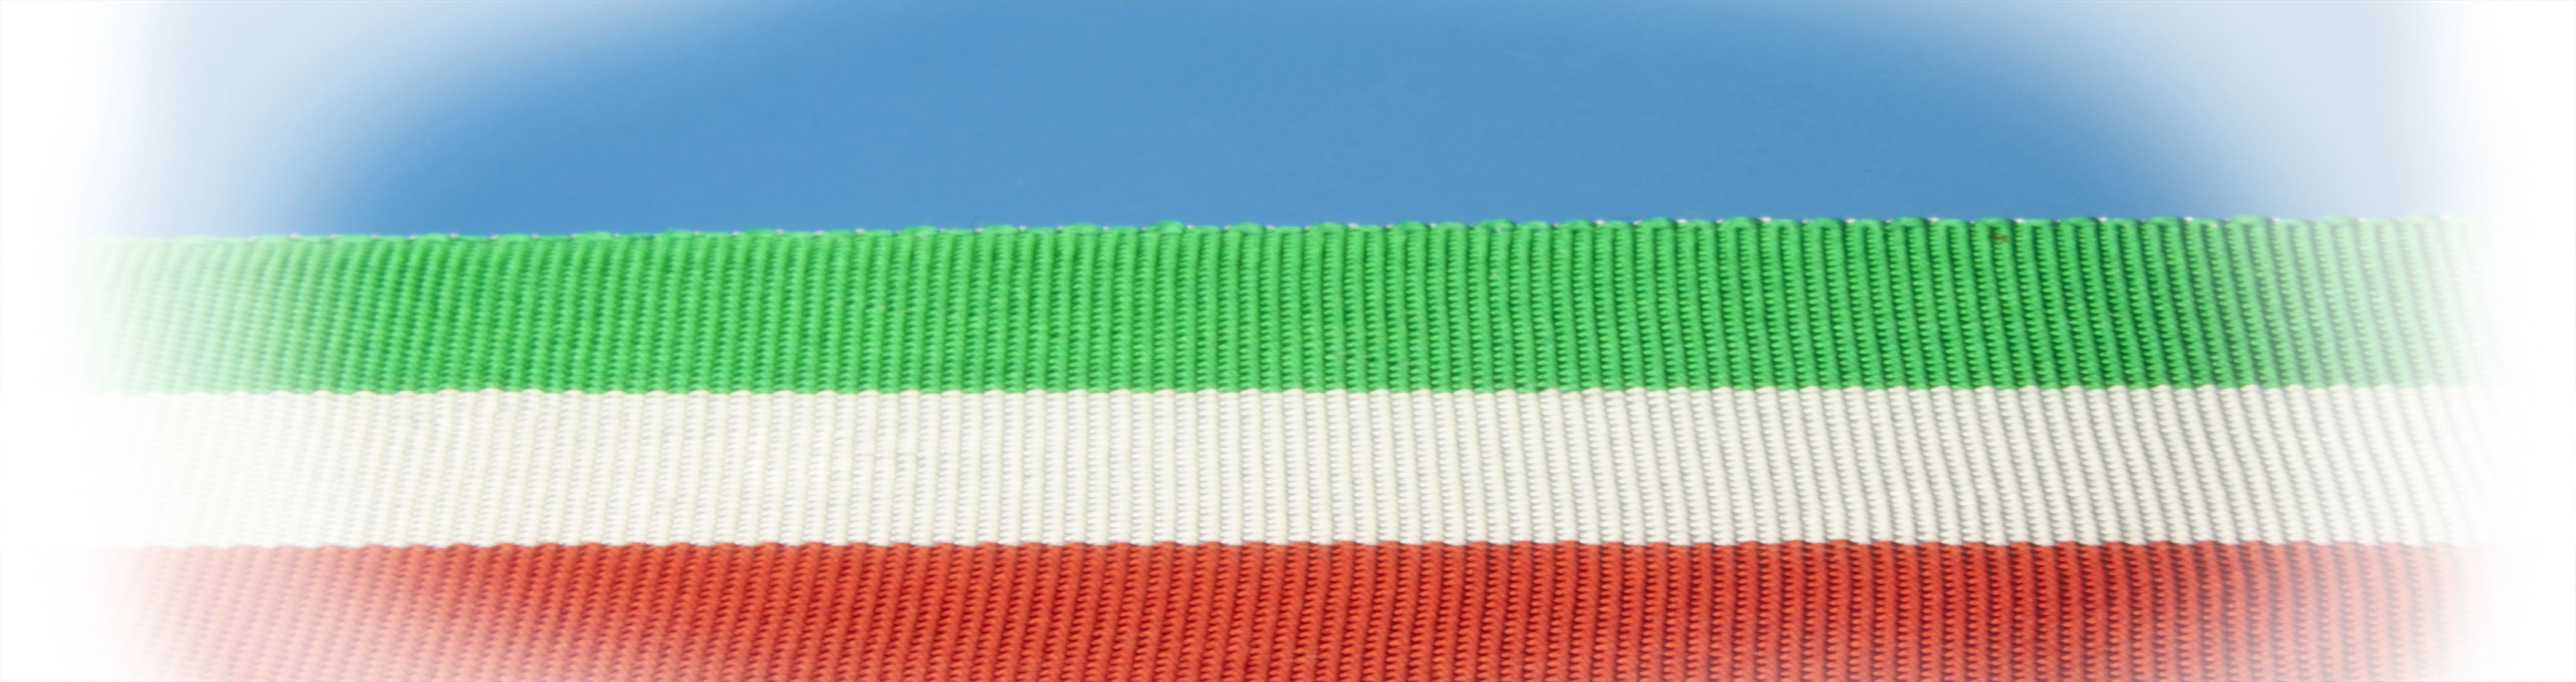 Italian tricolor ribbon of national flag